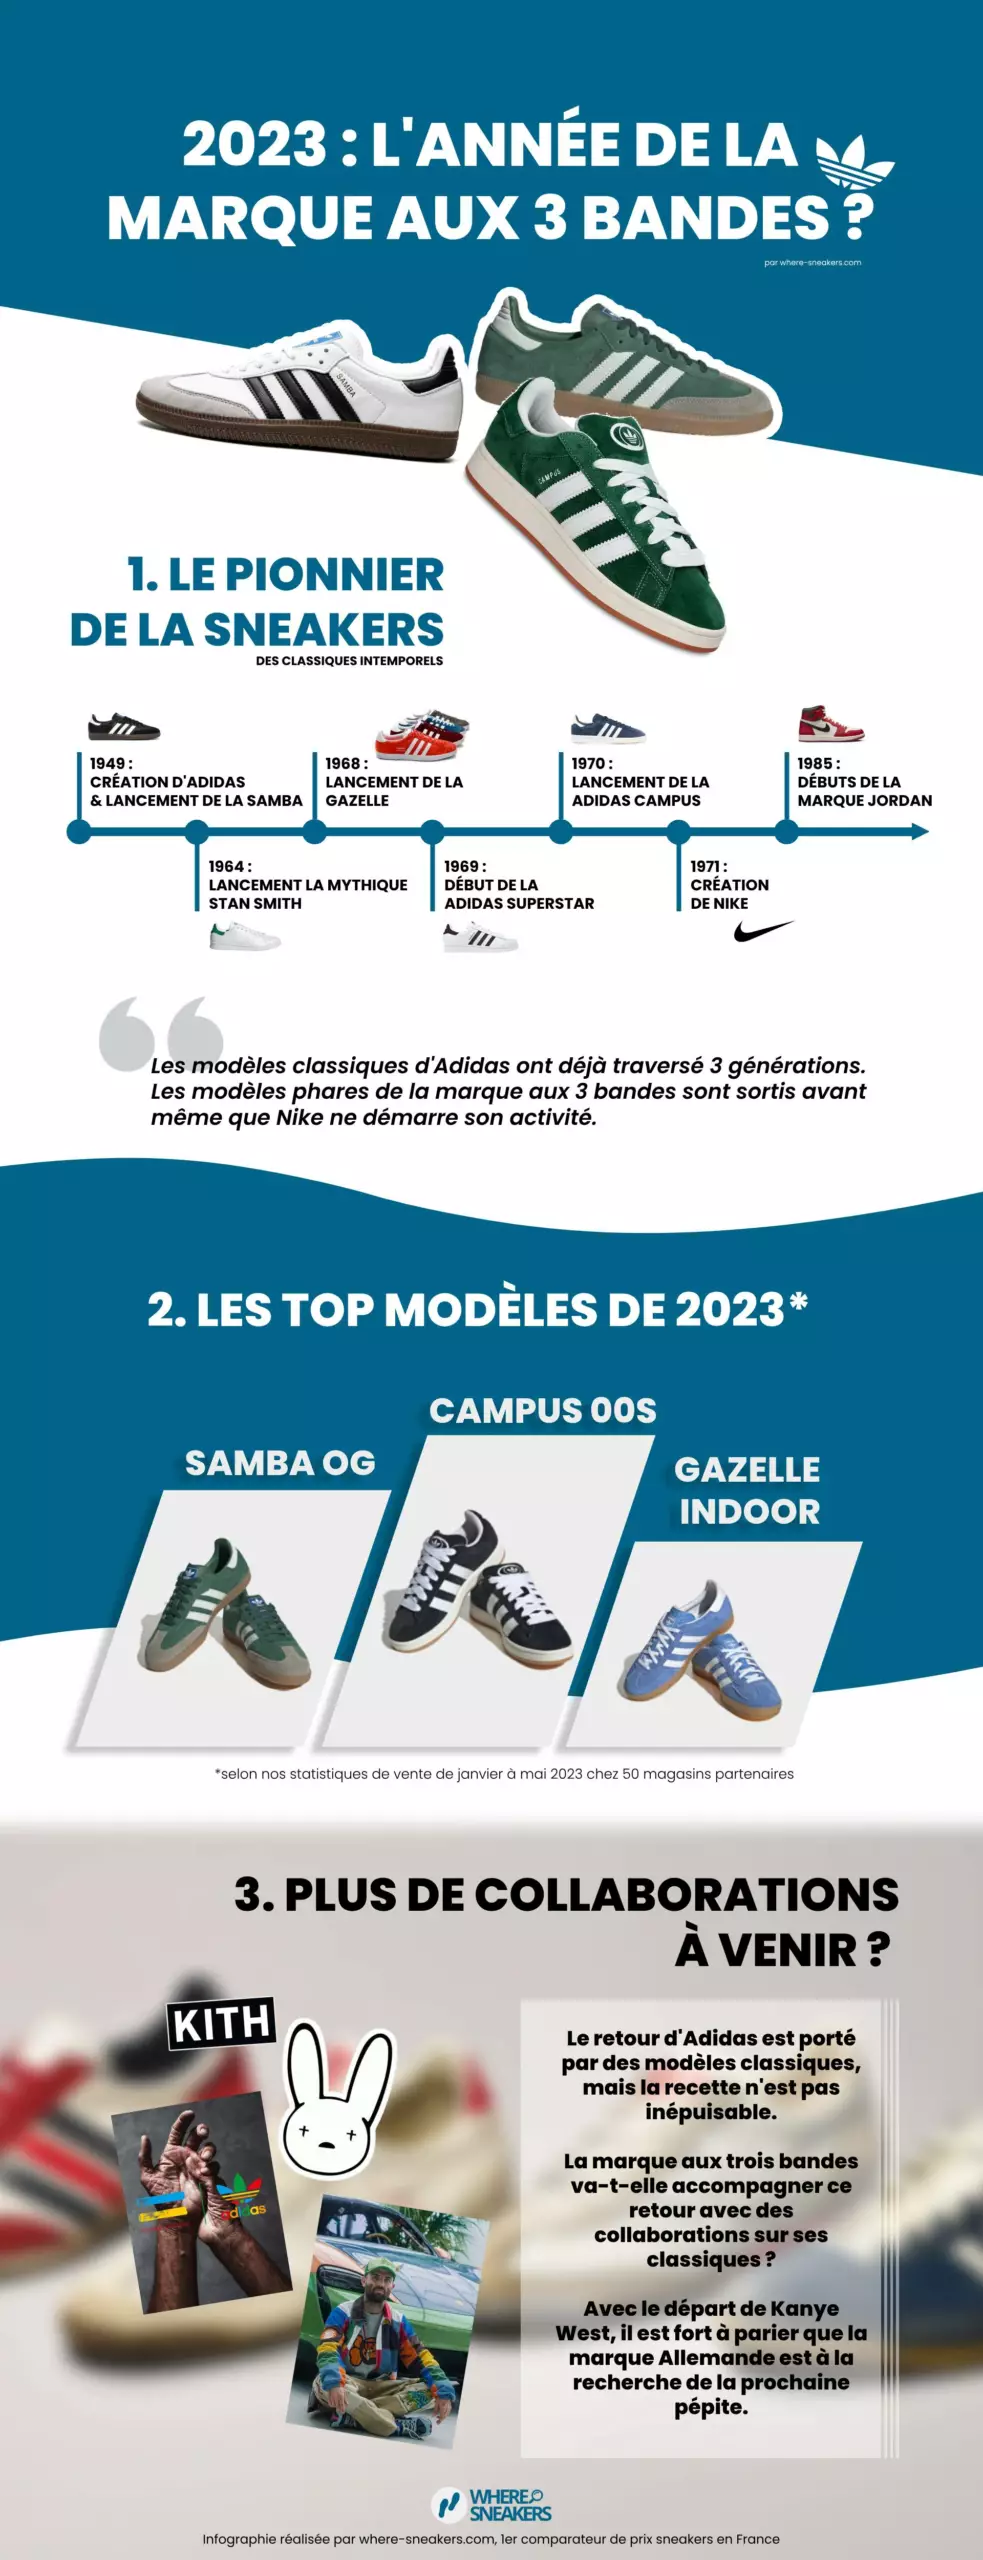 Adidas Campus Gazelle Handball Spezial et Samba - Analyse de leur retour en 2023